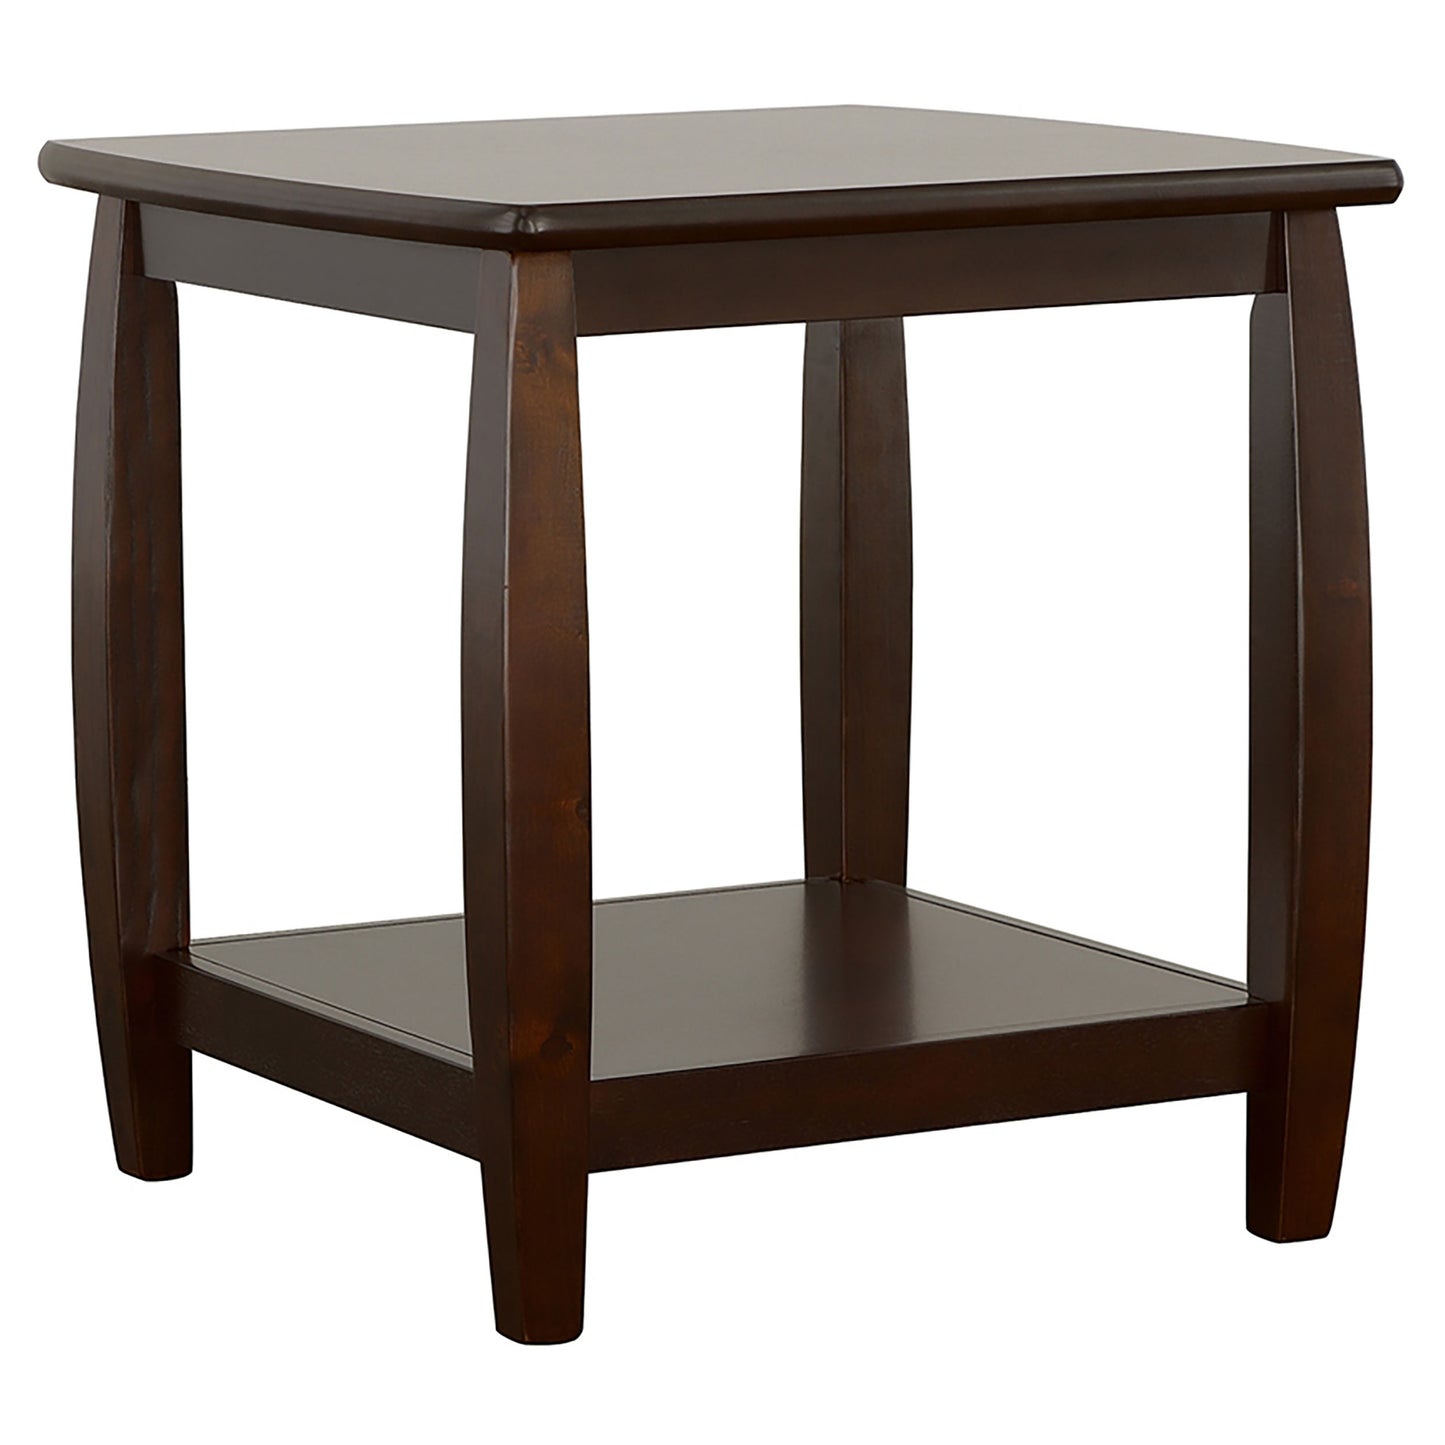 Dixon 3-piece Rectangular Wood Coffee Table Set Espresso